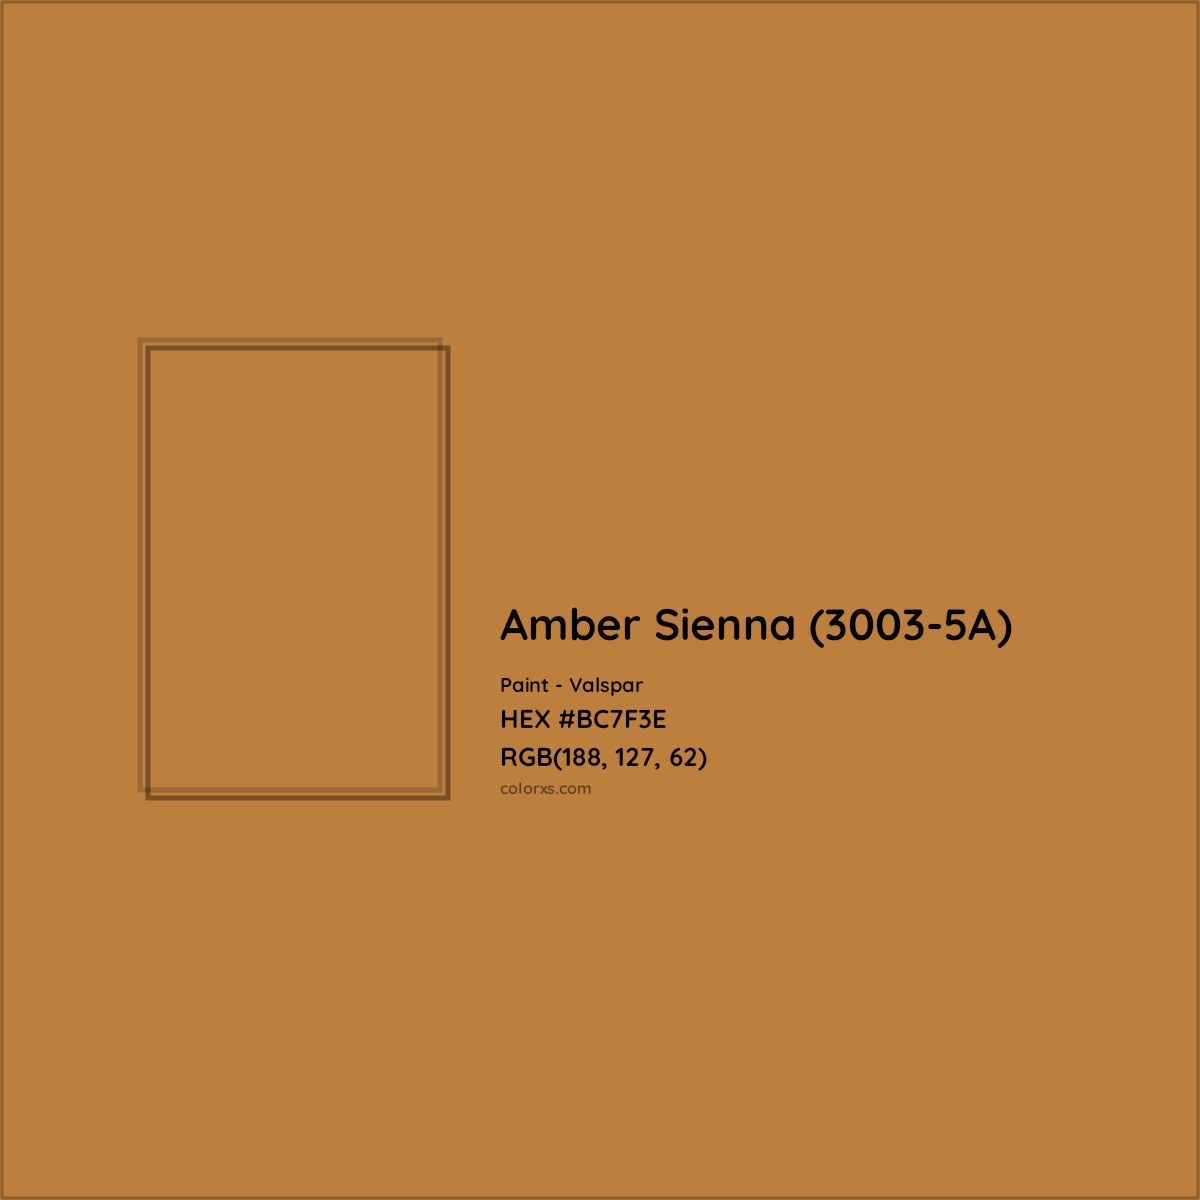 HEX #BC7F3E Amber Sienna (3003-5A) Paint Valspar - Color Code